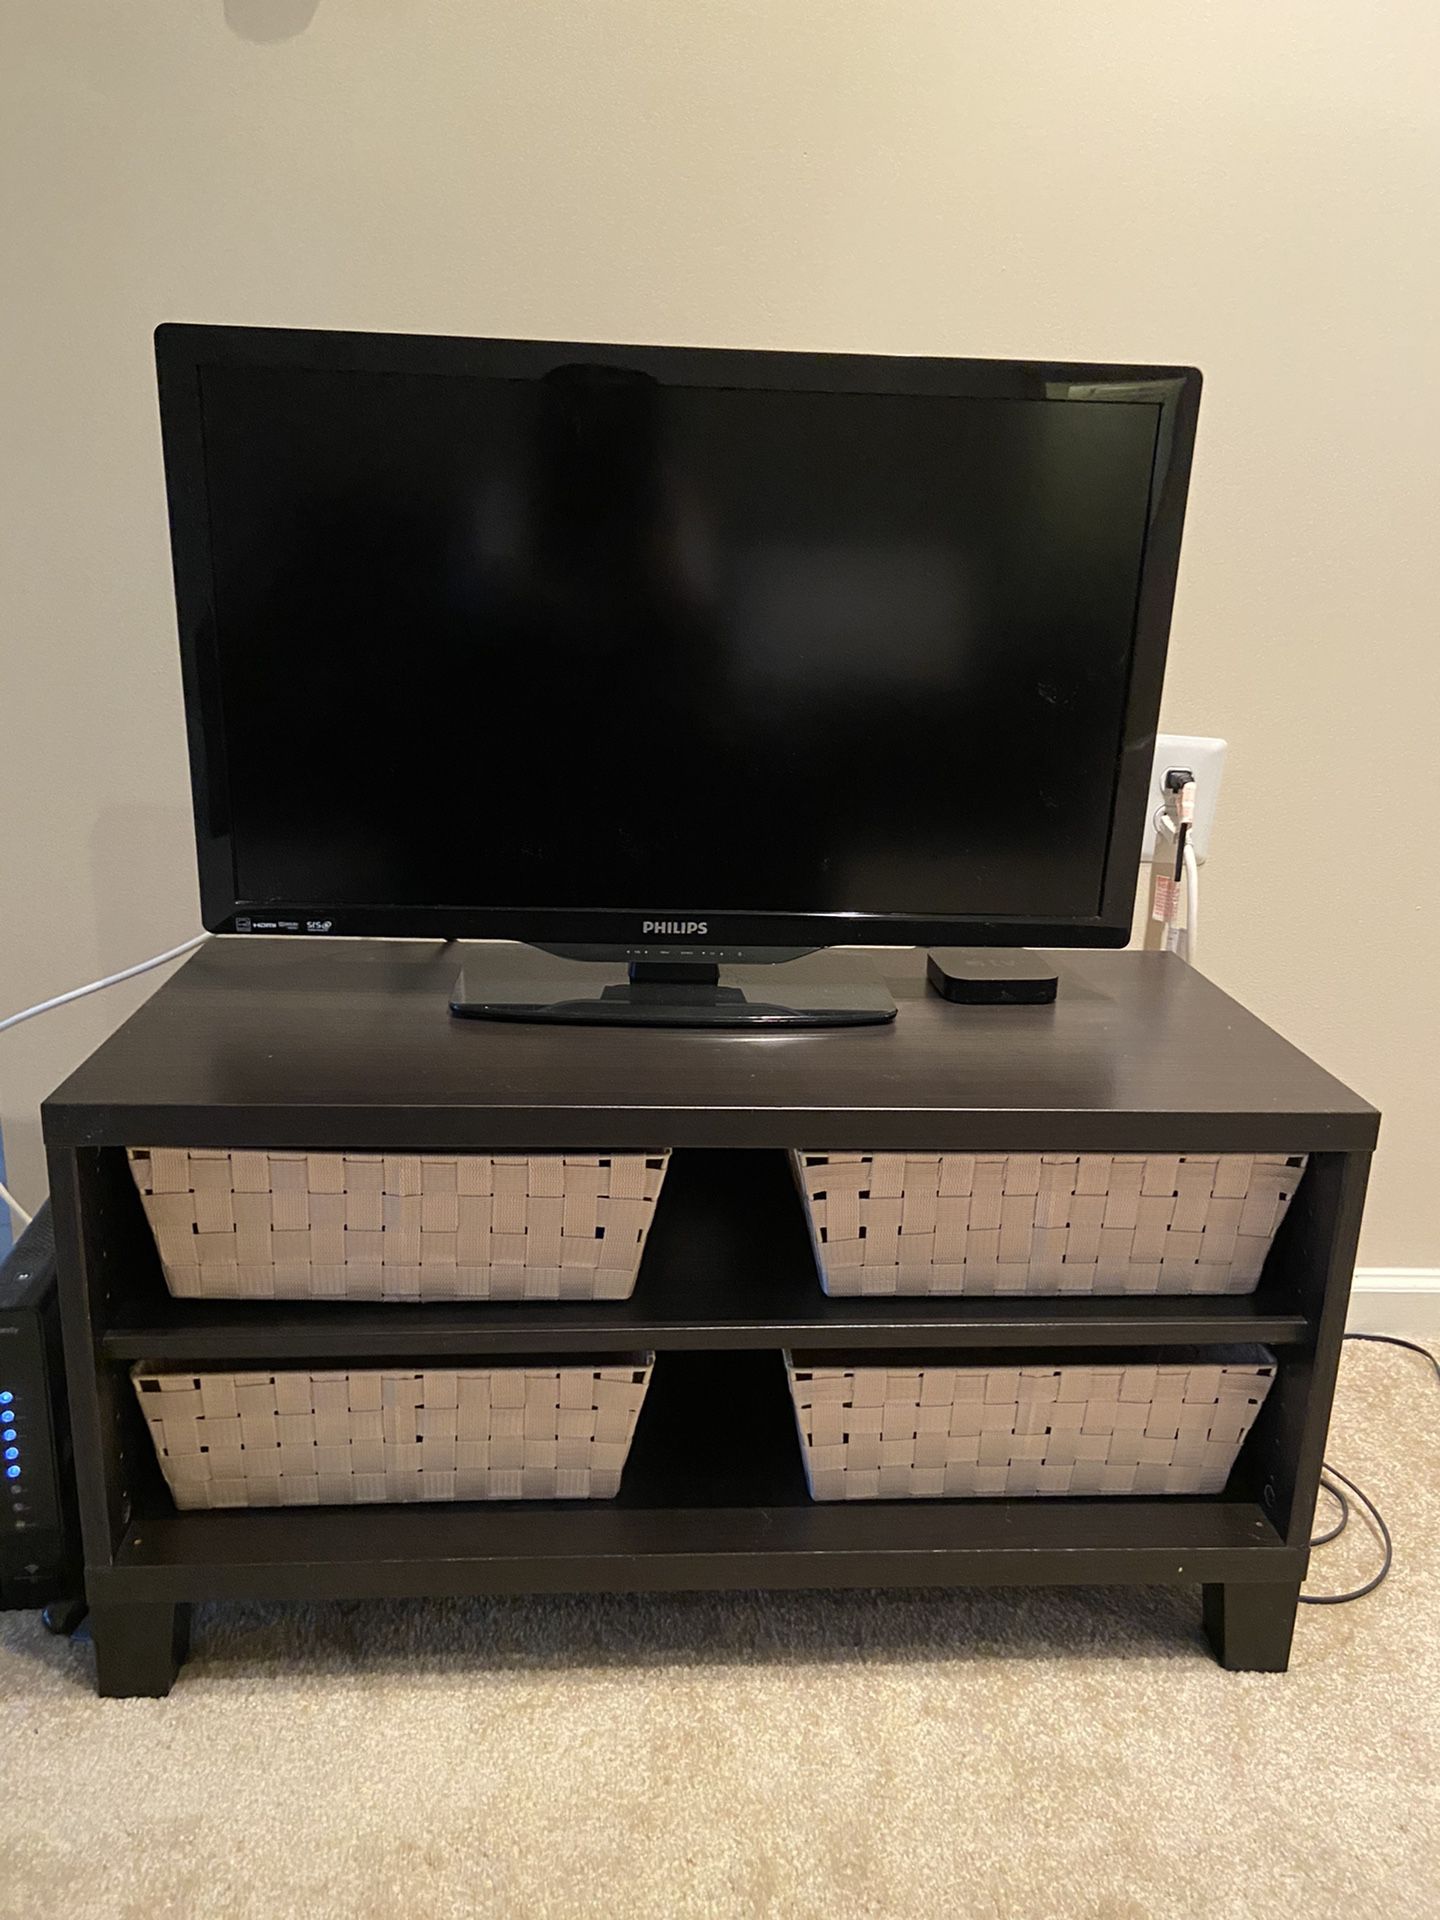 IKEA TV stand